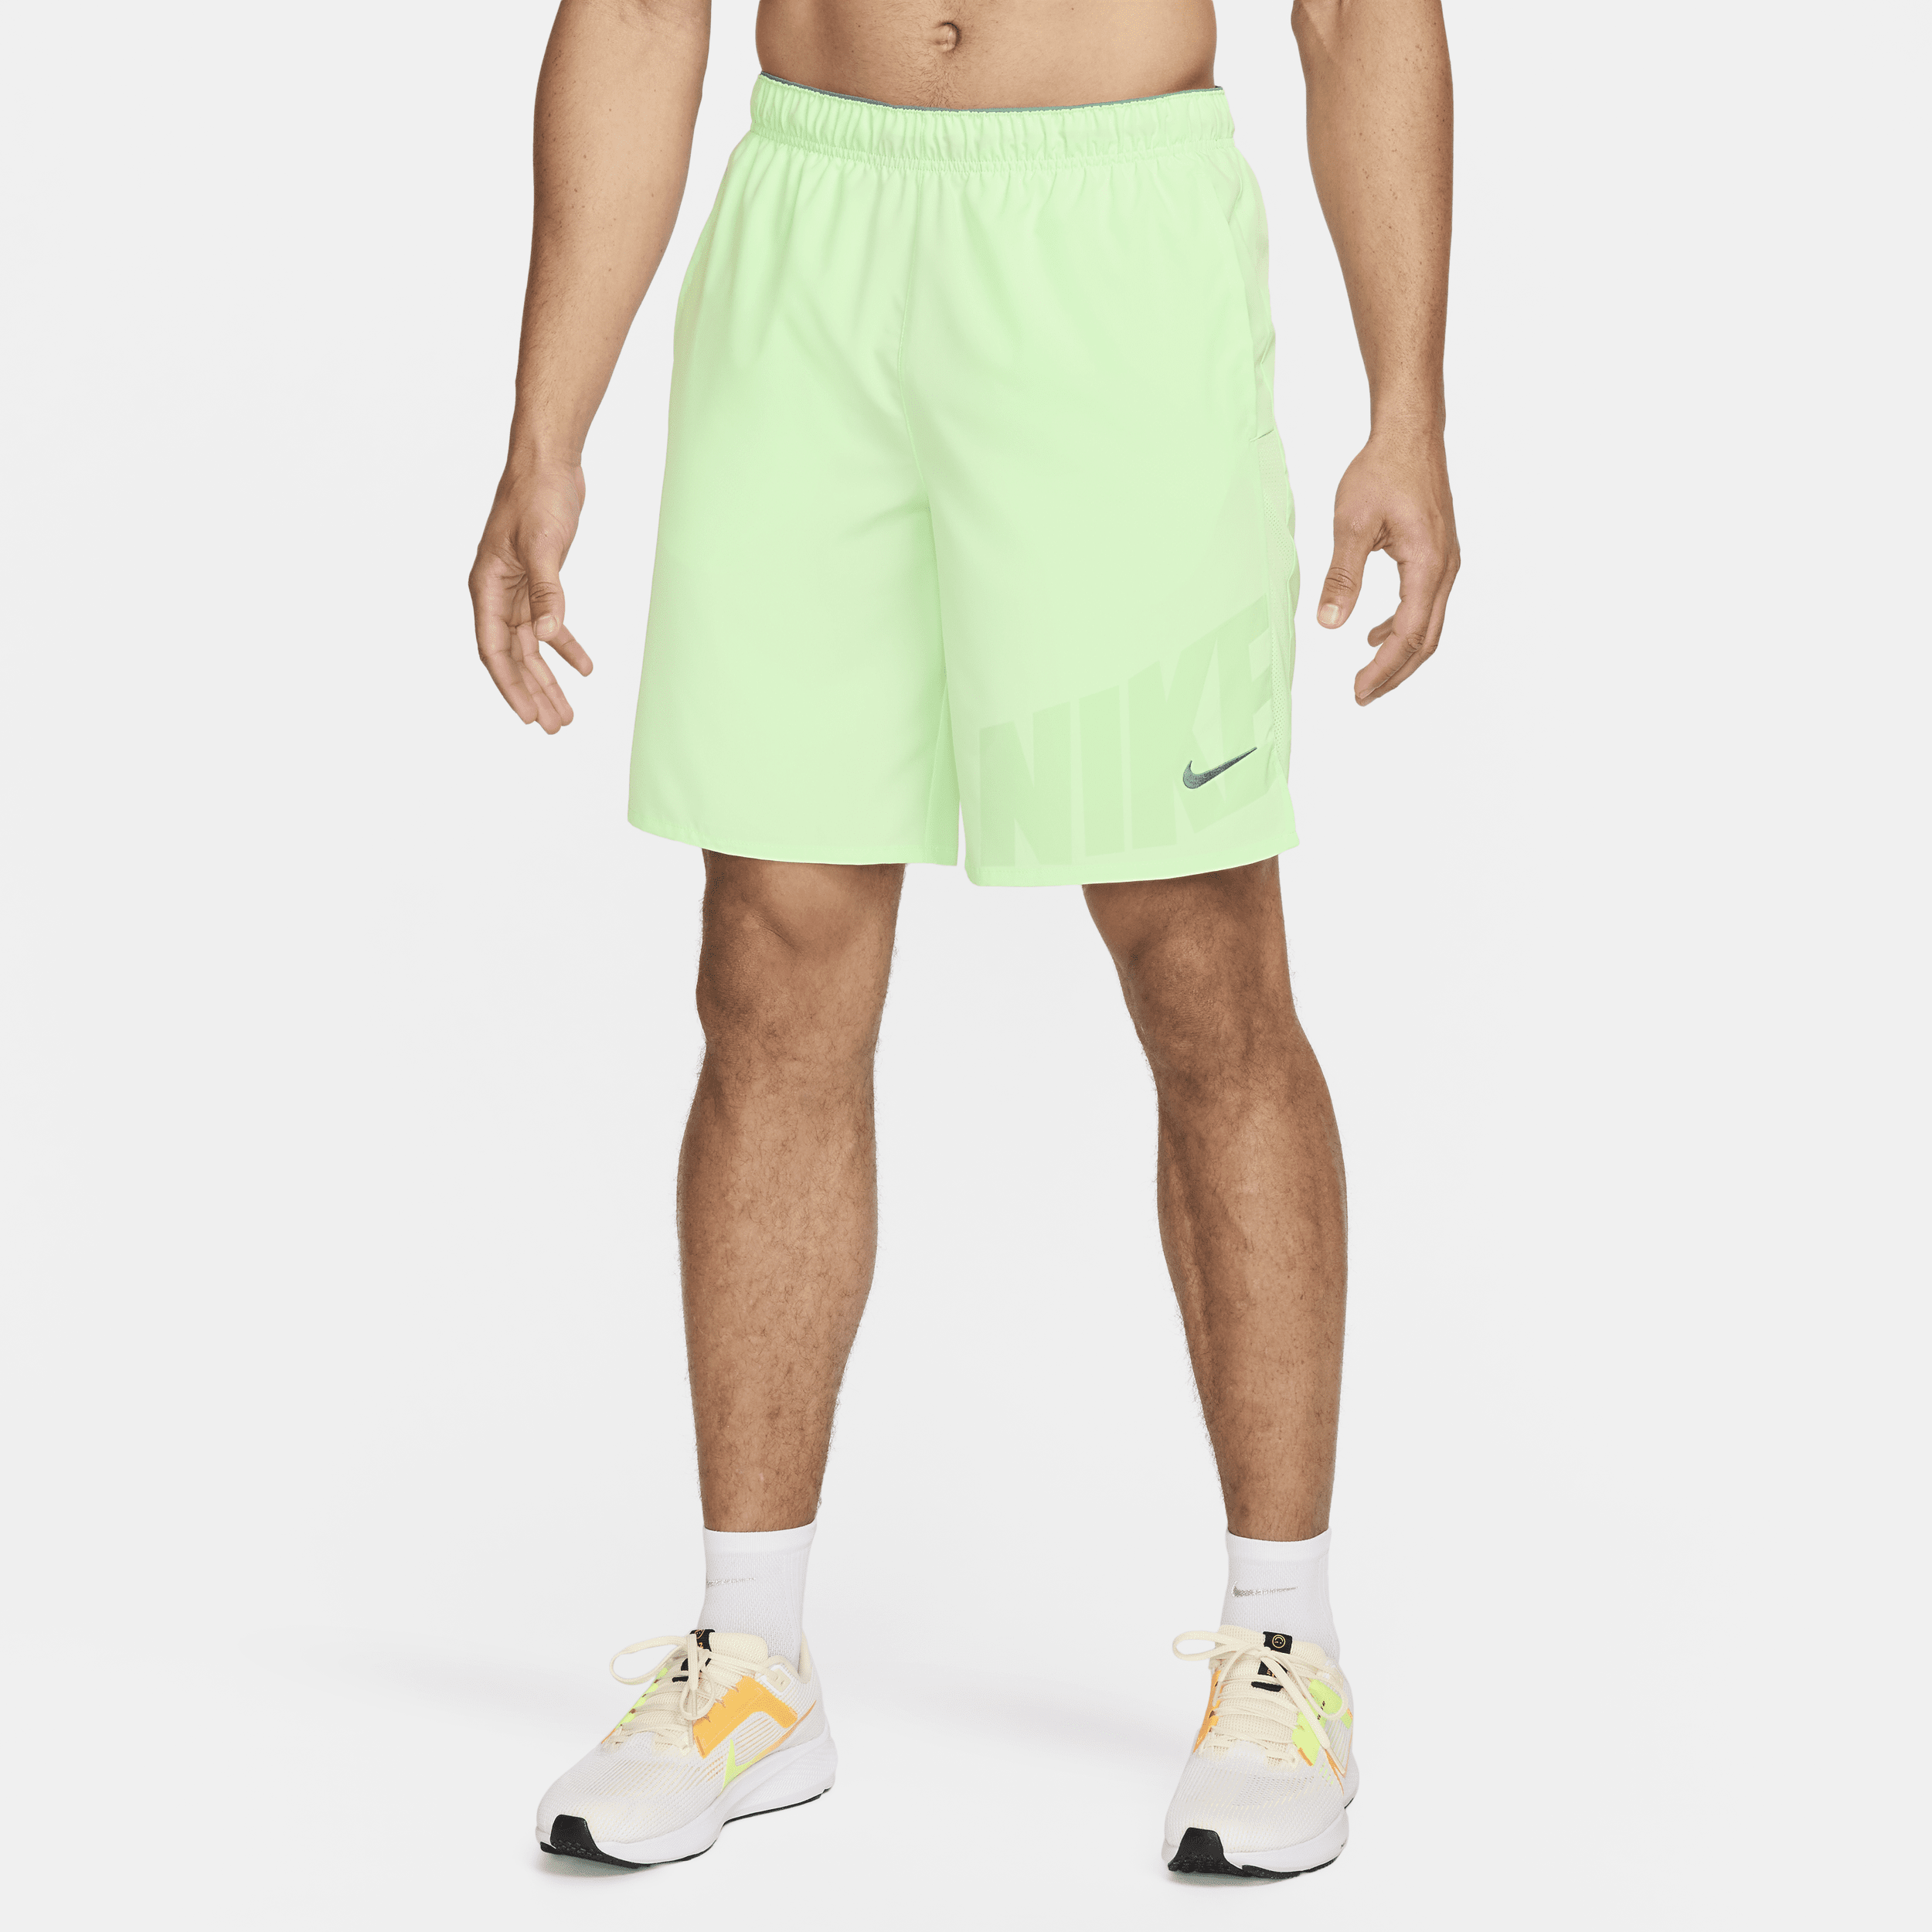 Shorts da running Dri-FIT non foderati 23 cm Nike Challenger – Uomo - Verde